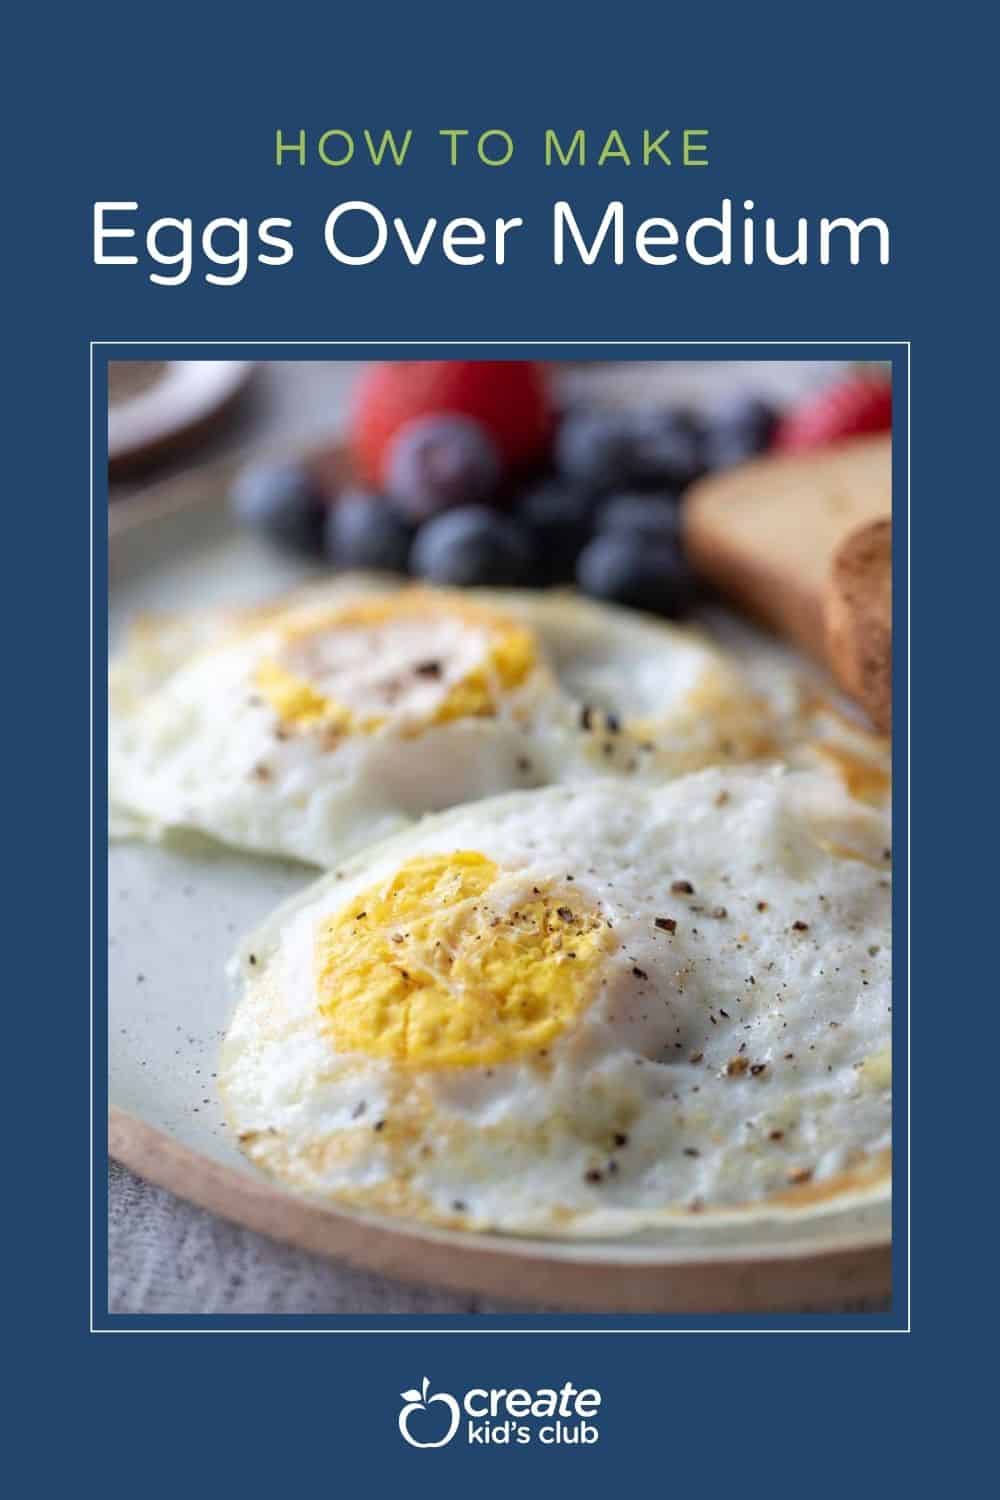 Pin of eggs over medium